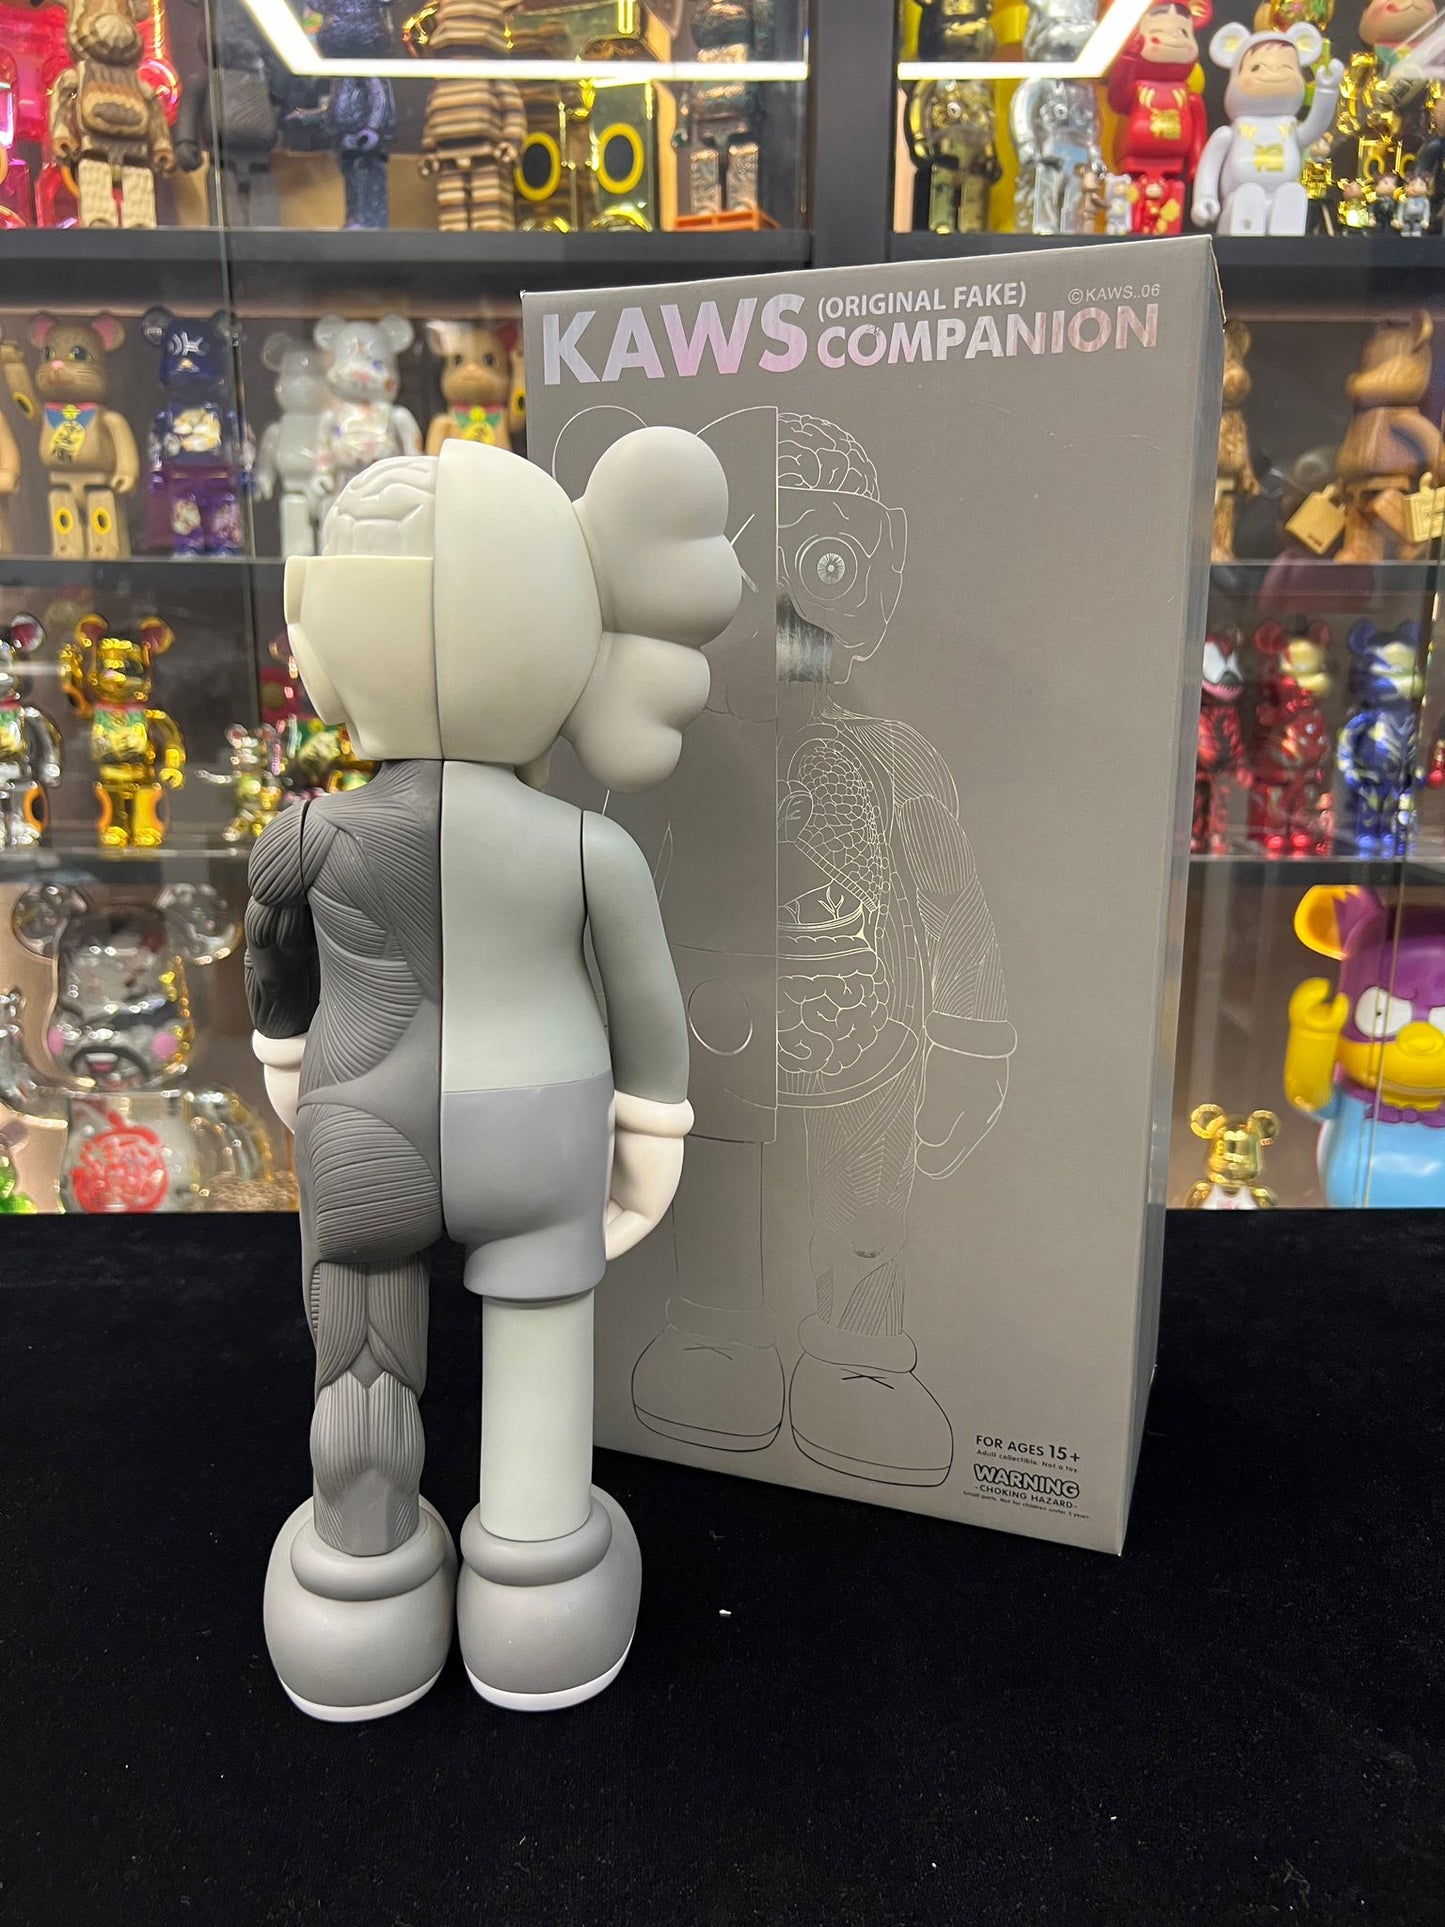 Kaws Companion (Original Fake) 2006 Demi-solution grise